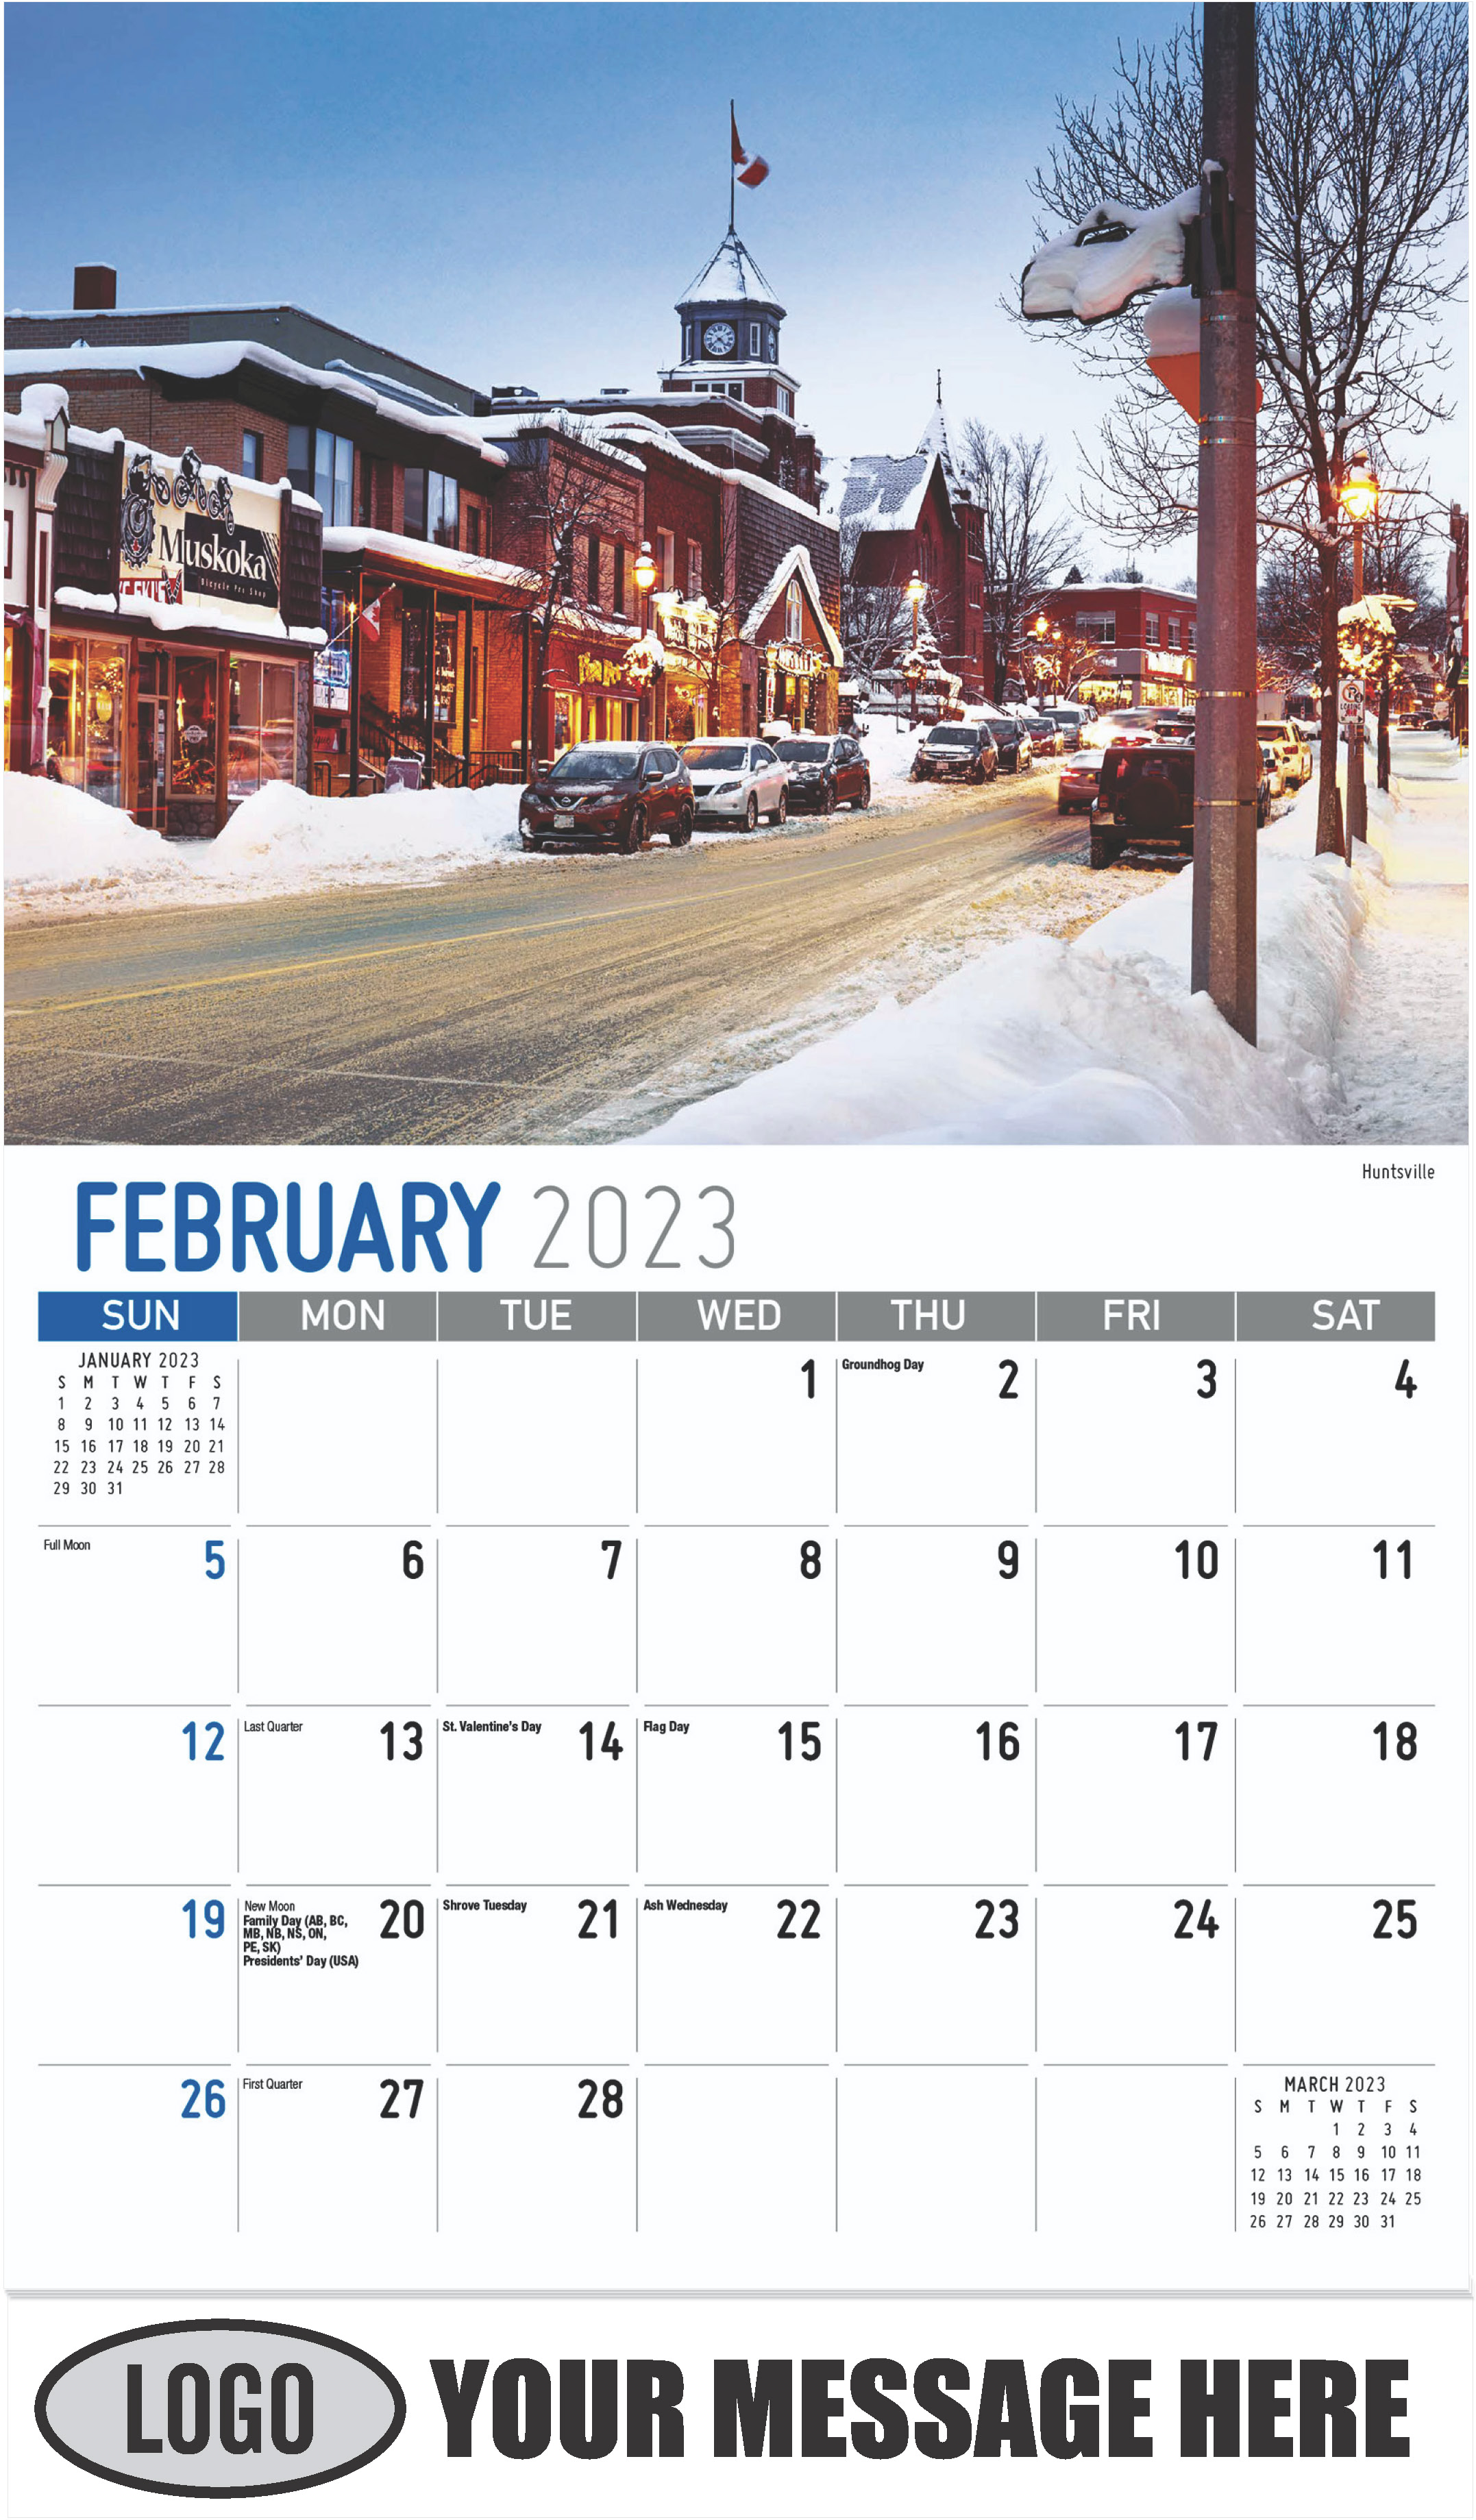 Huntsville - February - Scenes of Ontario 2023 Promotional Calendar